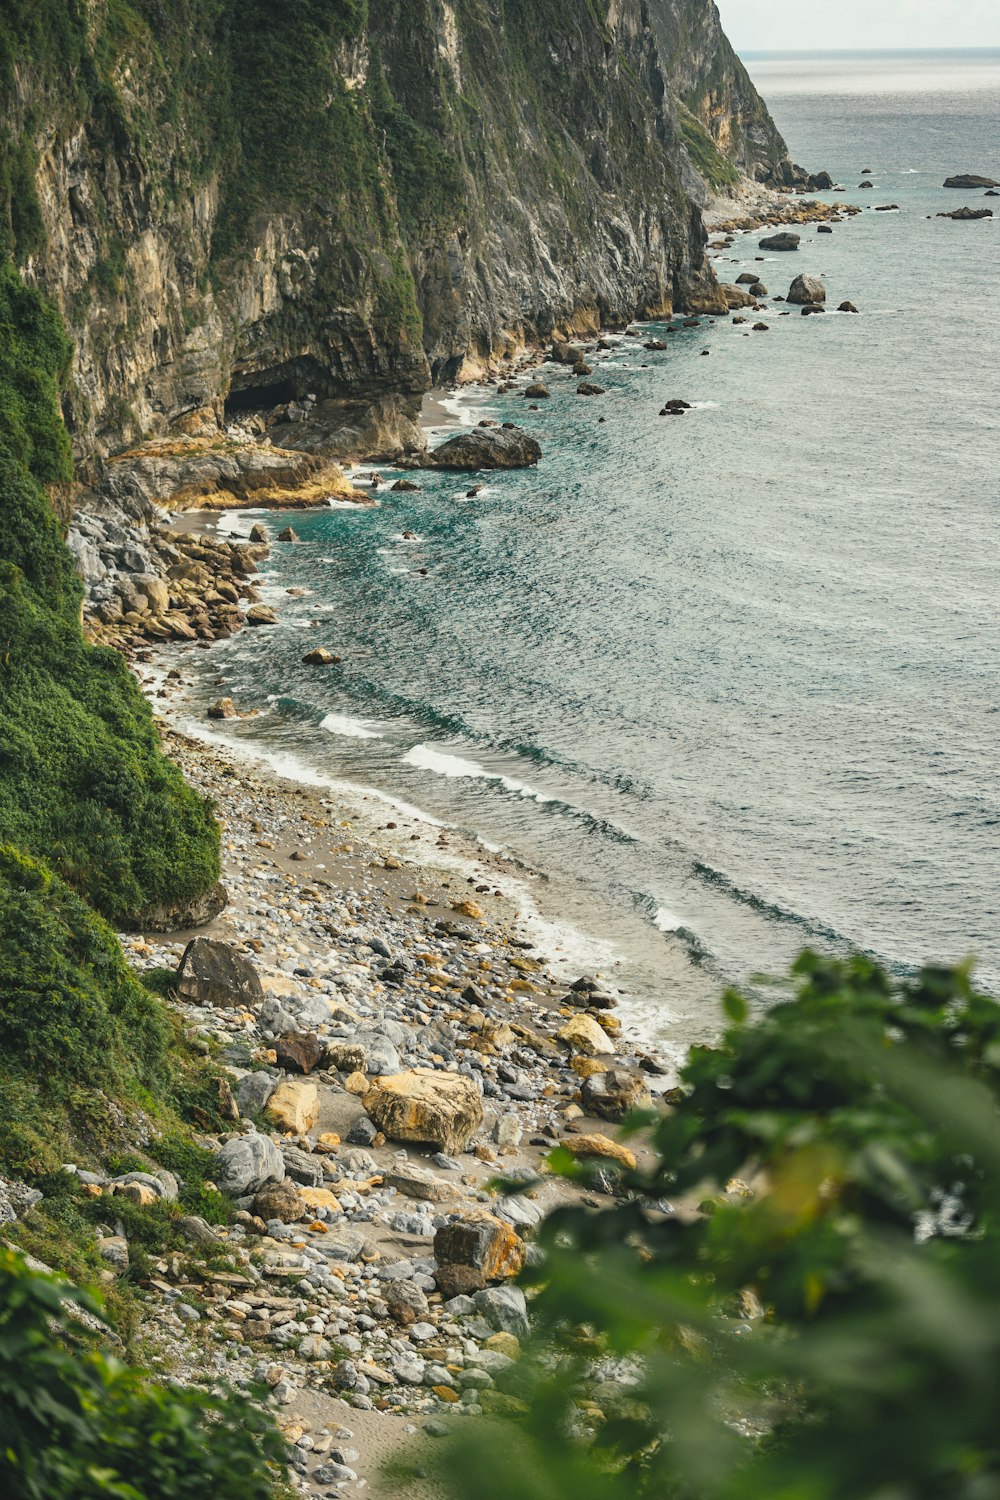 brown rocky beach with cliffs